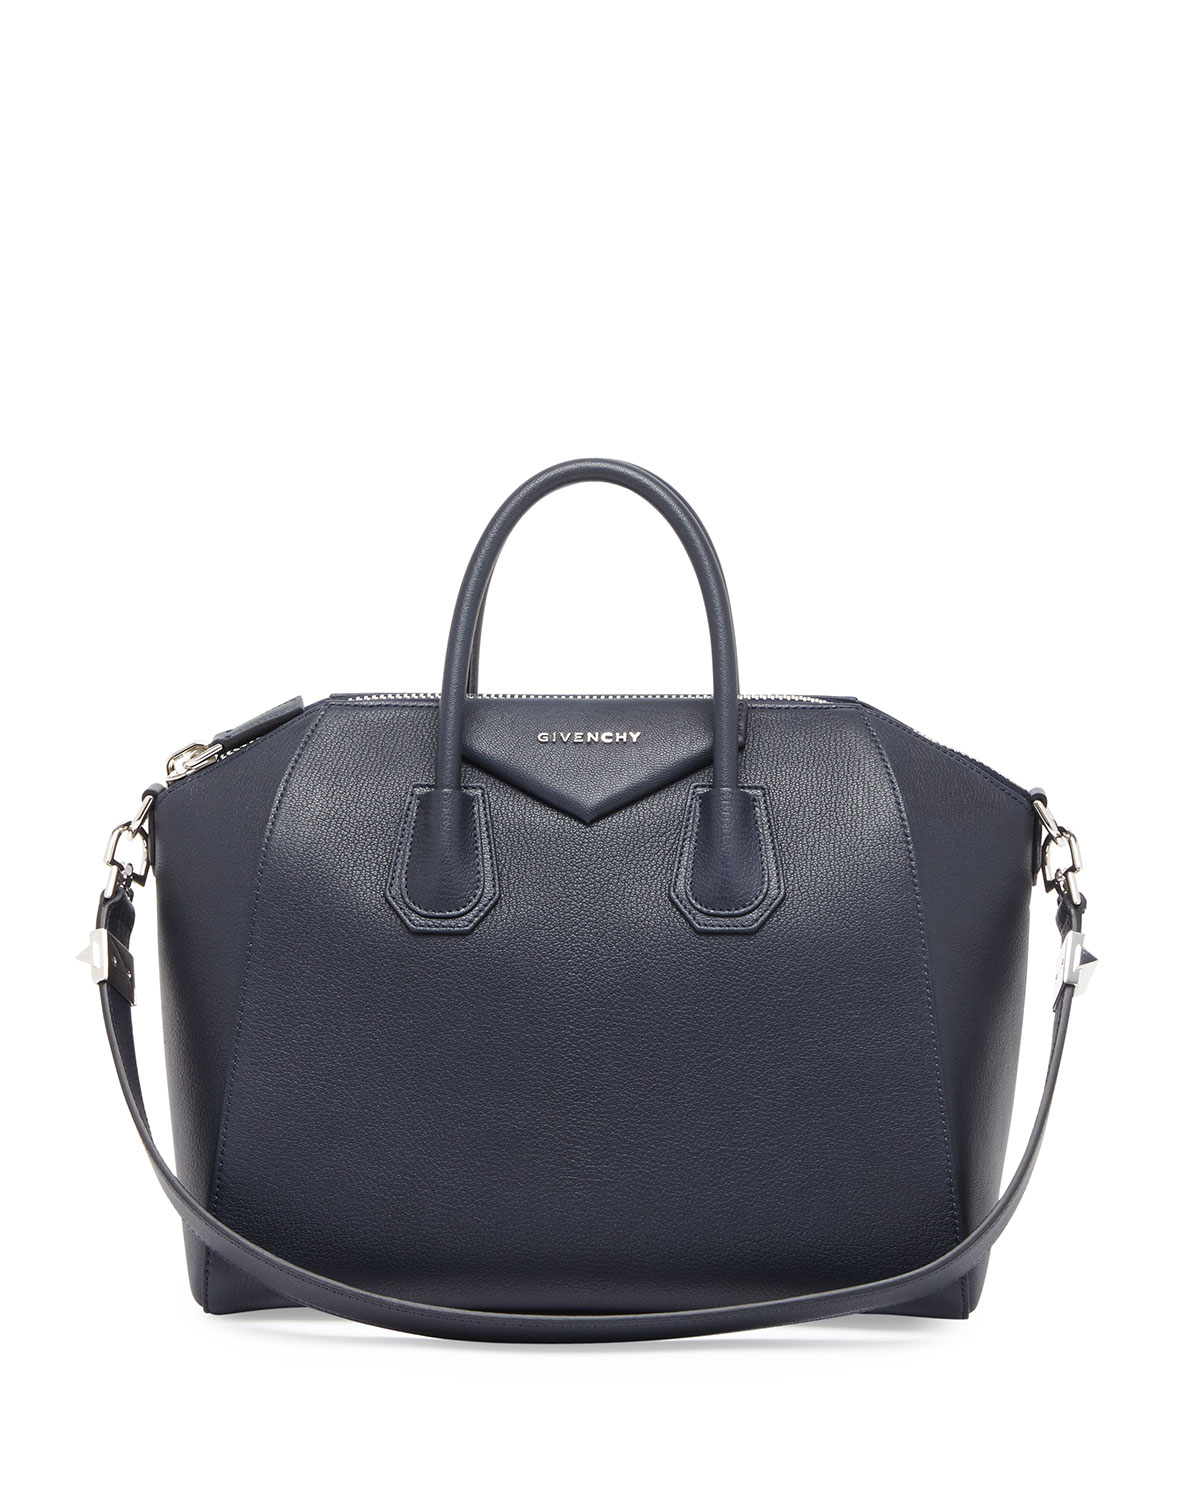 Givenchy Antigona Medium Sugar Satchel Bag in Blue (NAVY) | Lyst